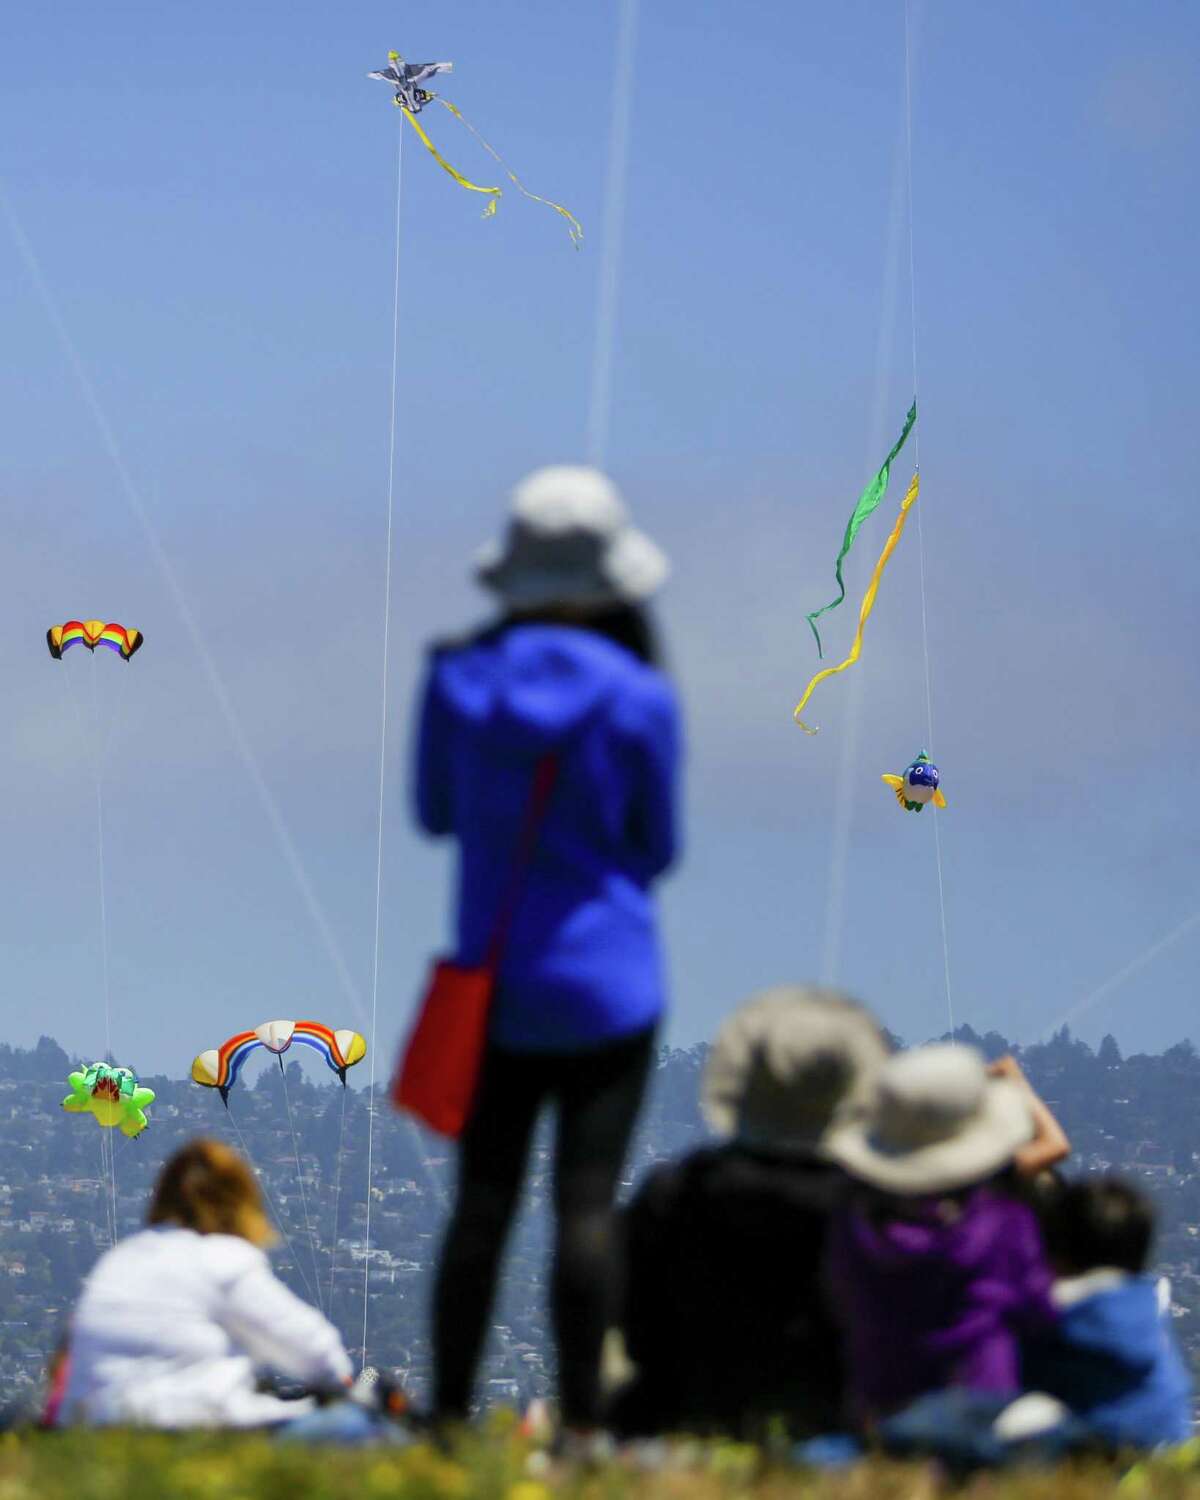 Berkeley’s Kite Festival a chance to enjoy the outdoors